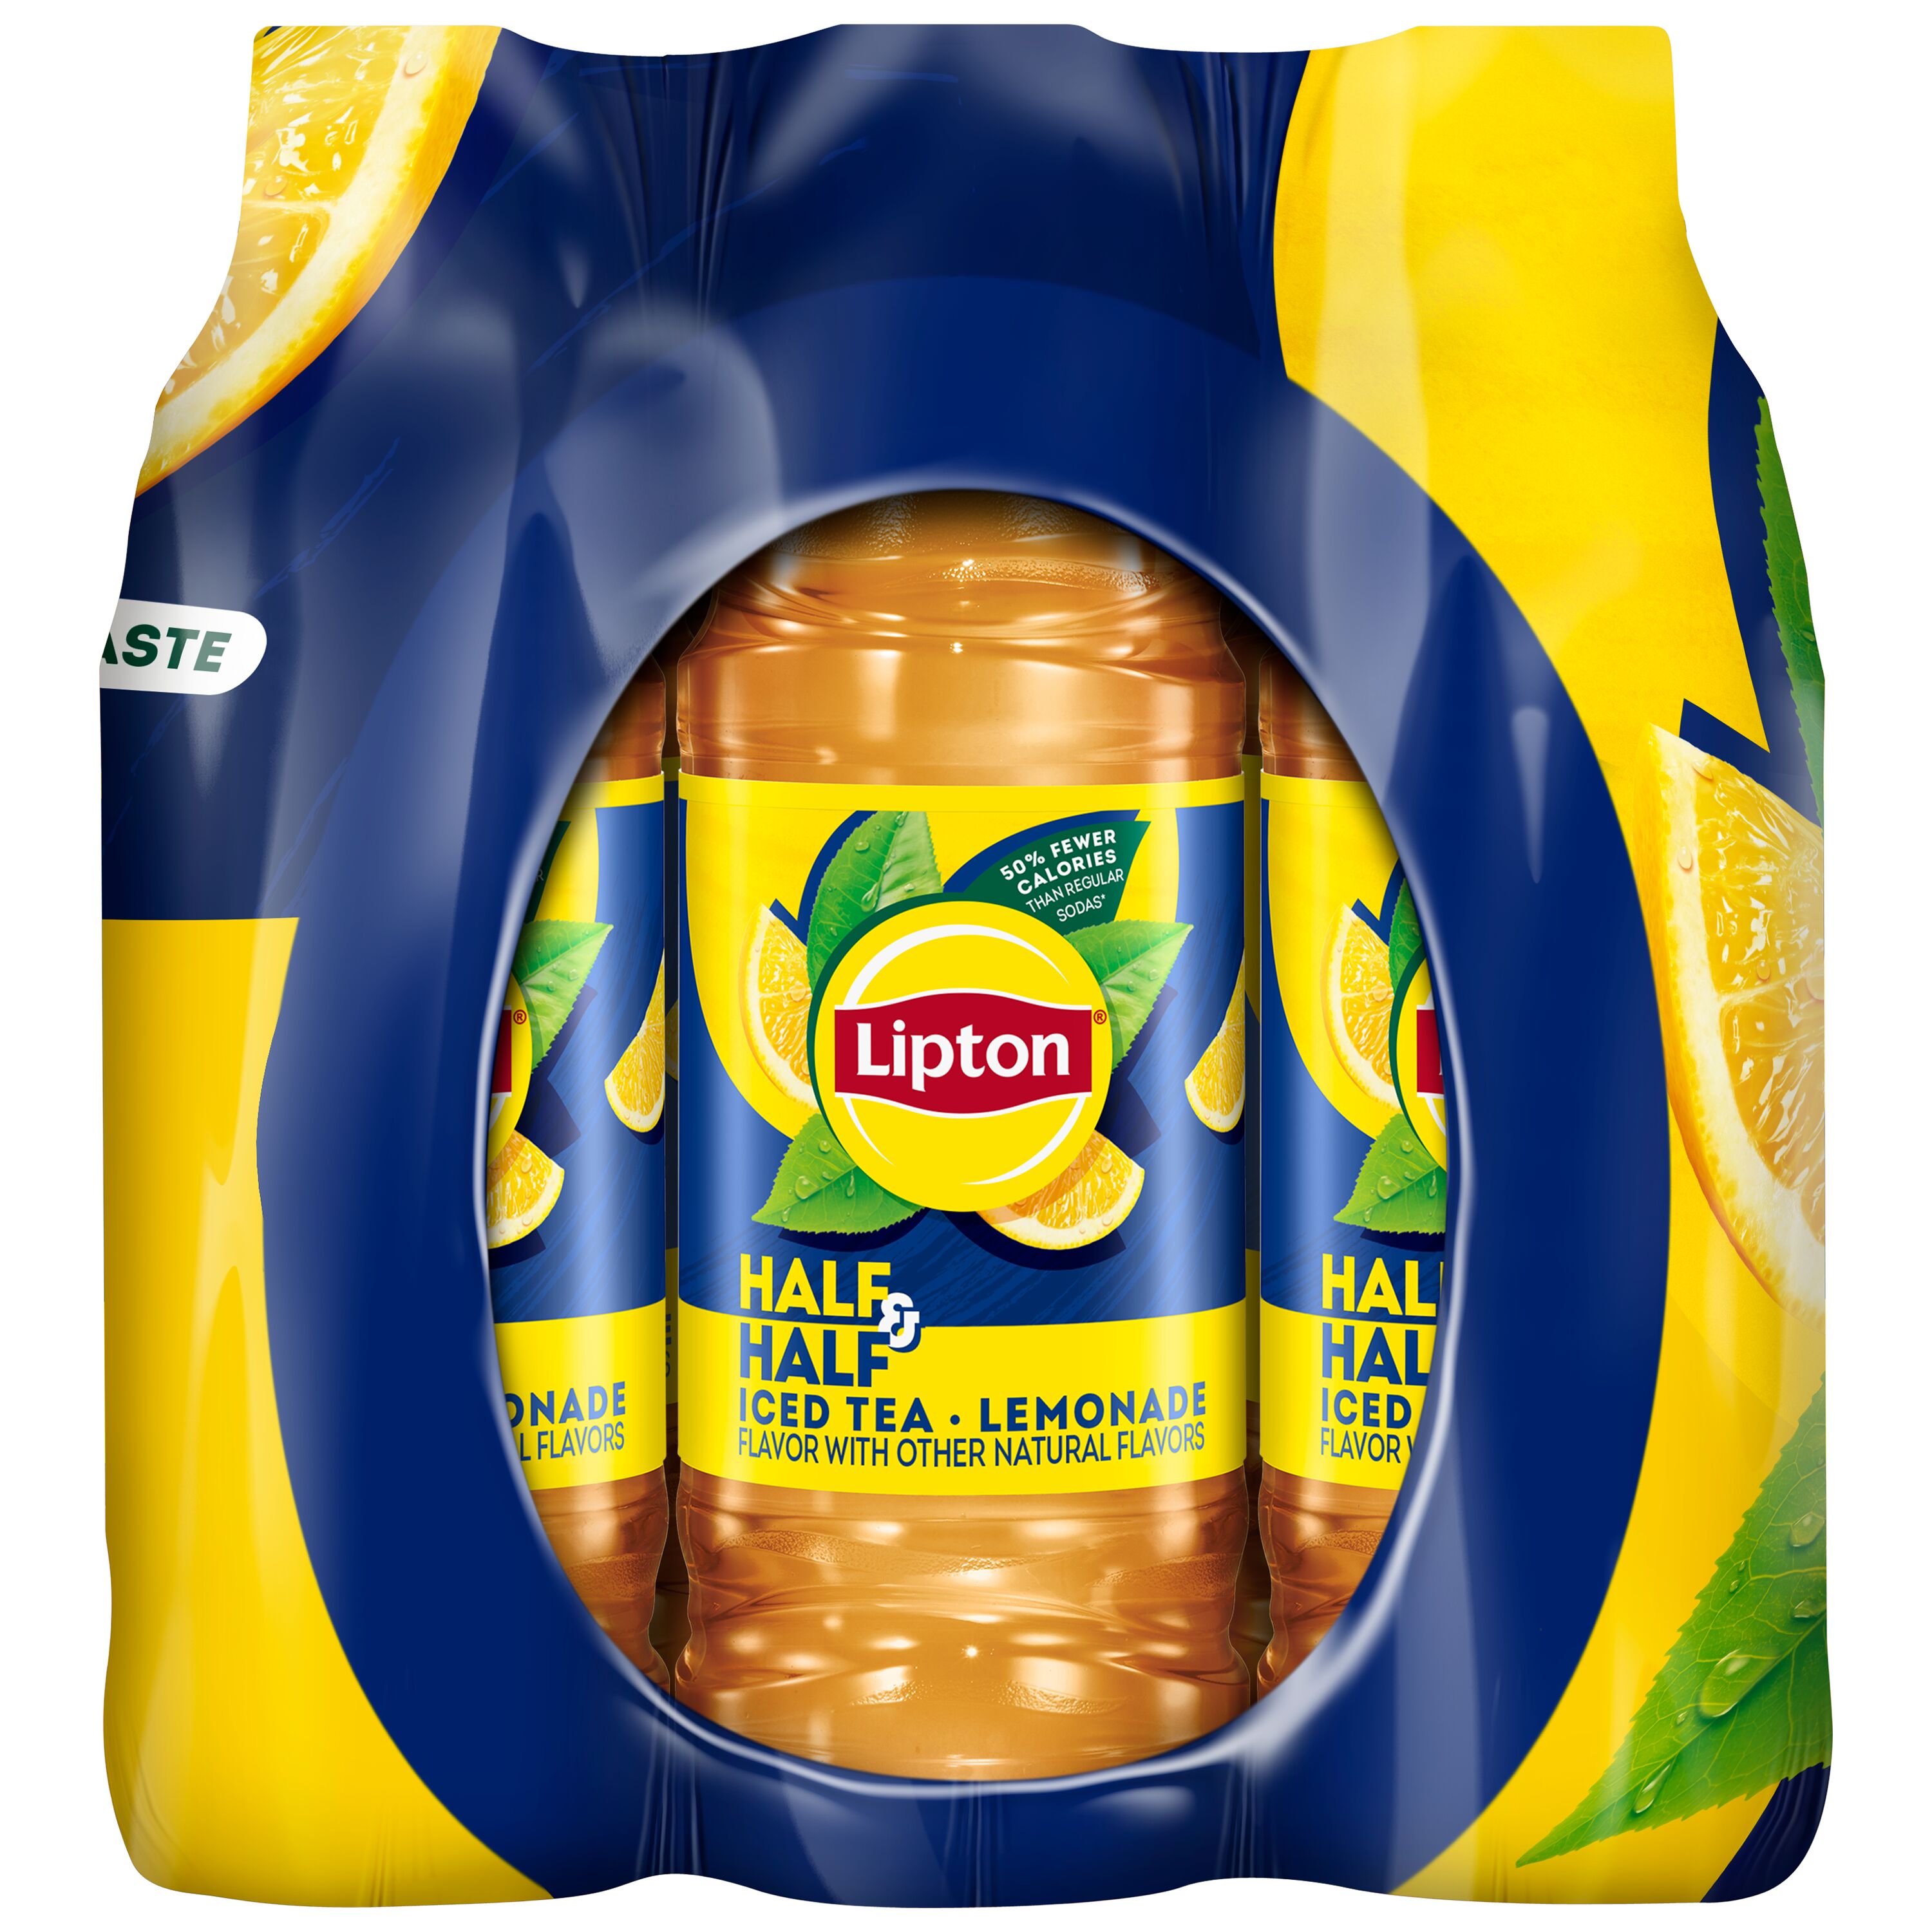 Lipton Half & Half Lemonade Iced Tea, 16.9 fl oz, 12 Pack Bottles - image 4 of 6